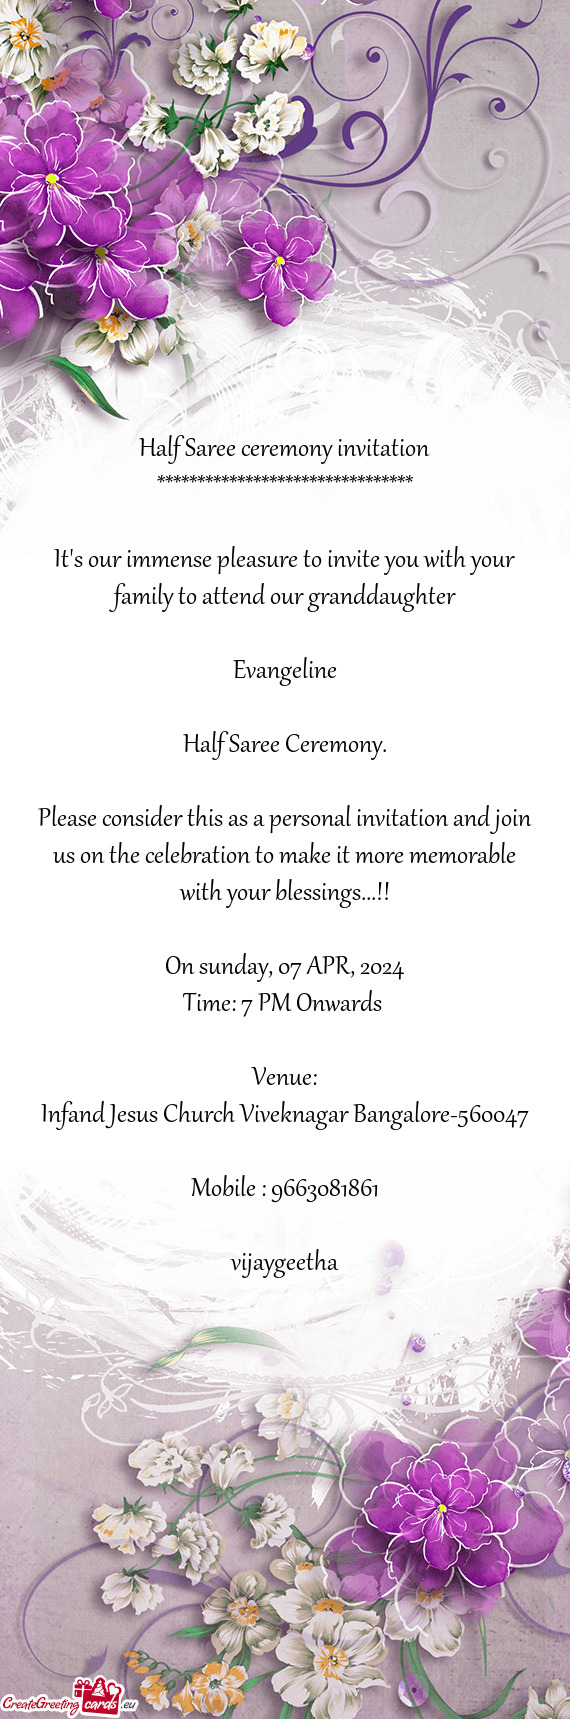 Infand Jesus Church Viveknagar Bangalore-560047